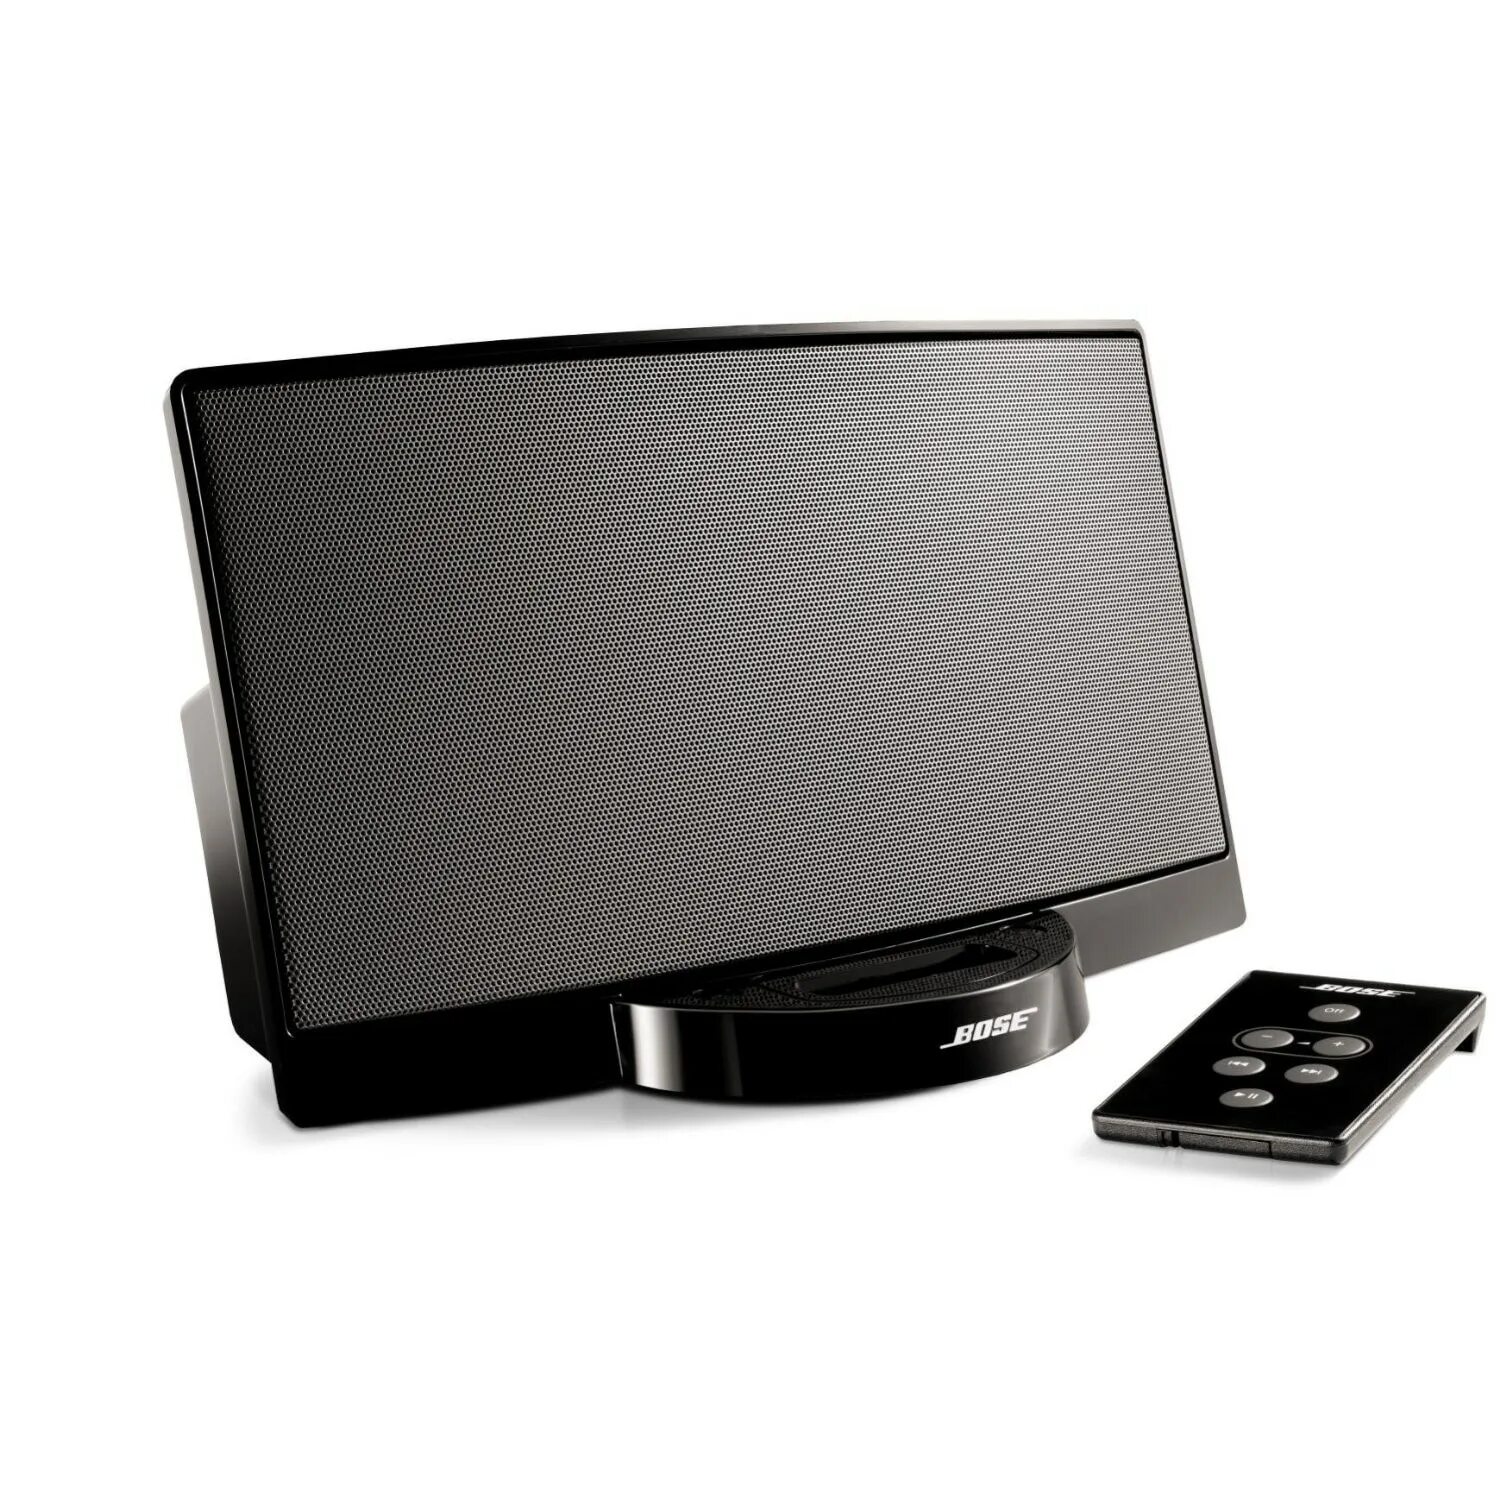 Bose SOUNDDOCK 1. Bose SOUNDDOCK 3. Bose SOUNDDOCK Digital Music System.